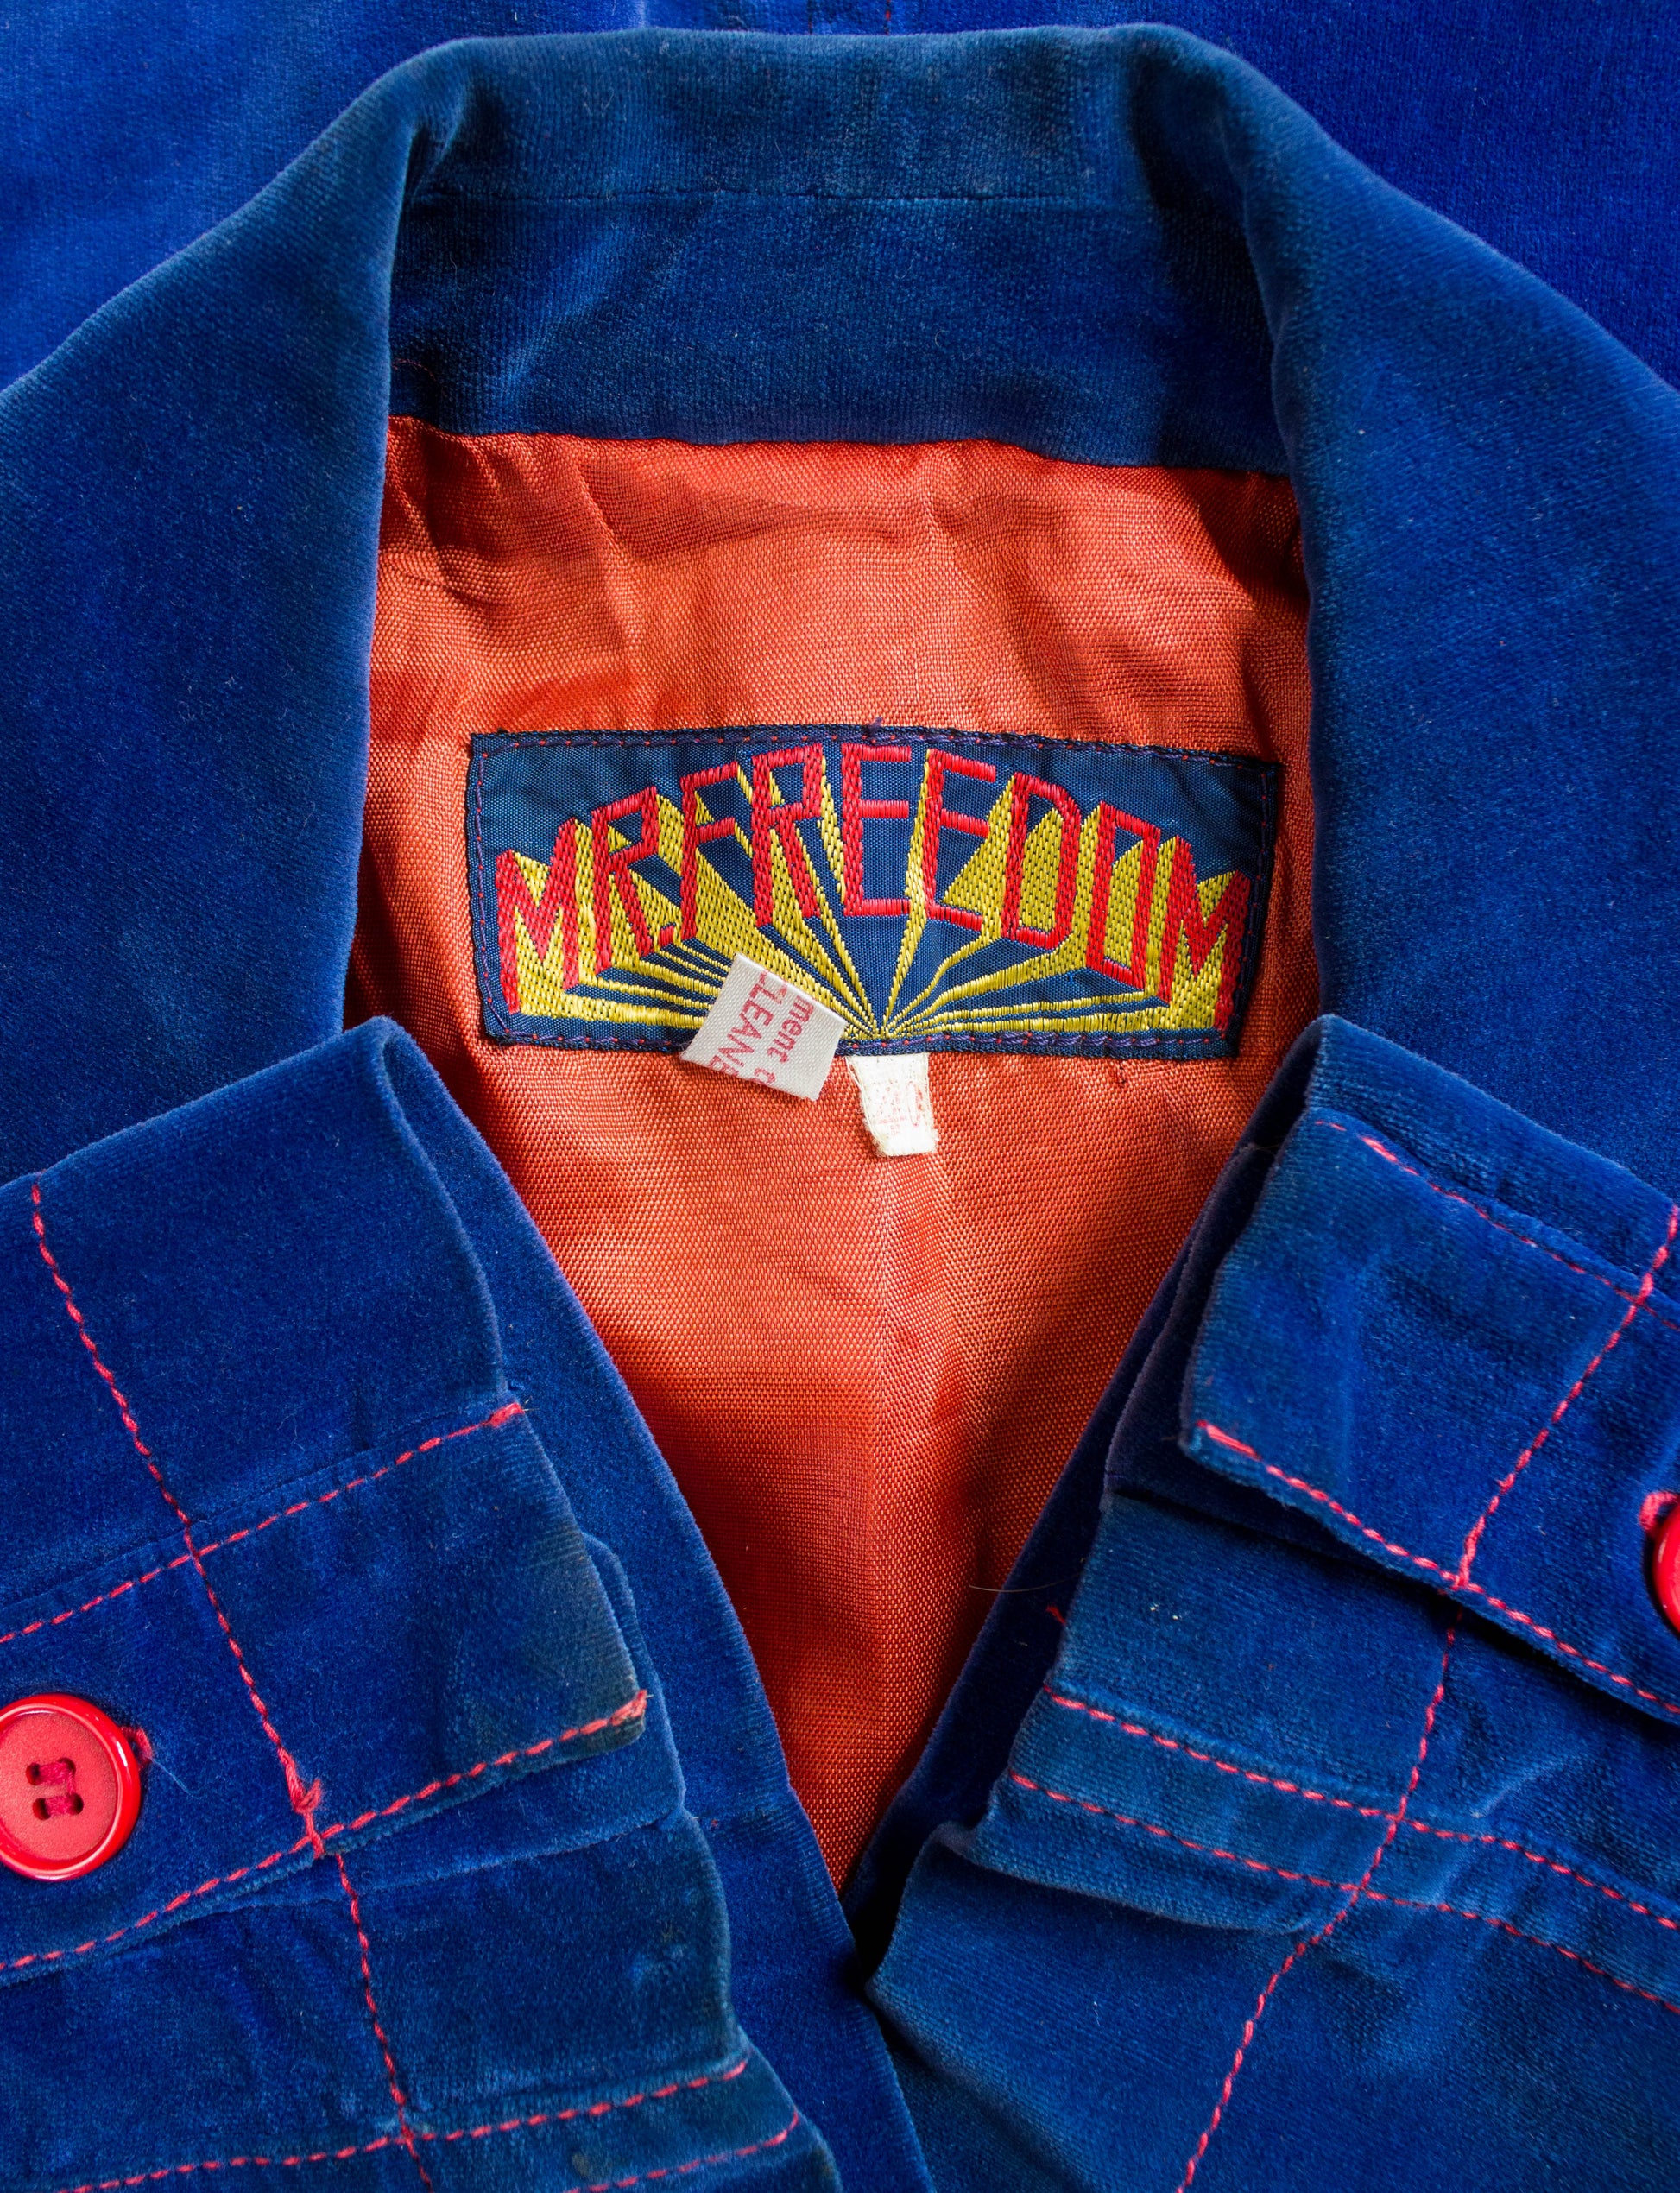 Vintage Mr. Freedom Velvet Blazer Jacket 1969 Blue Red Size 40